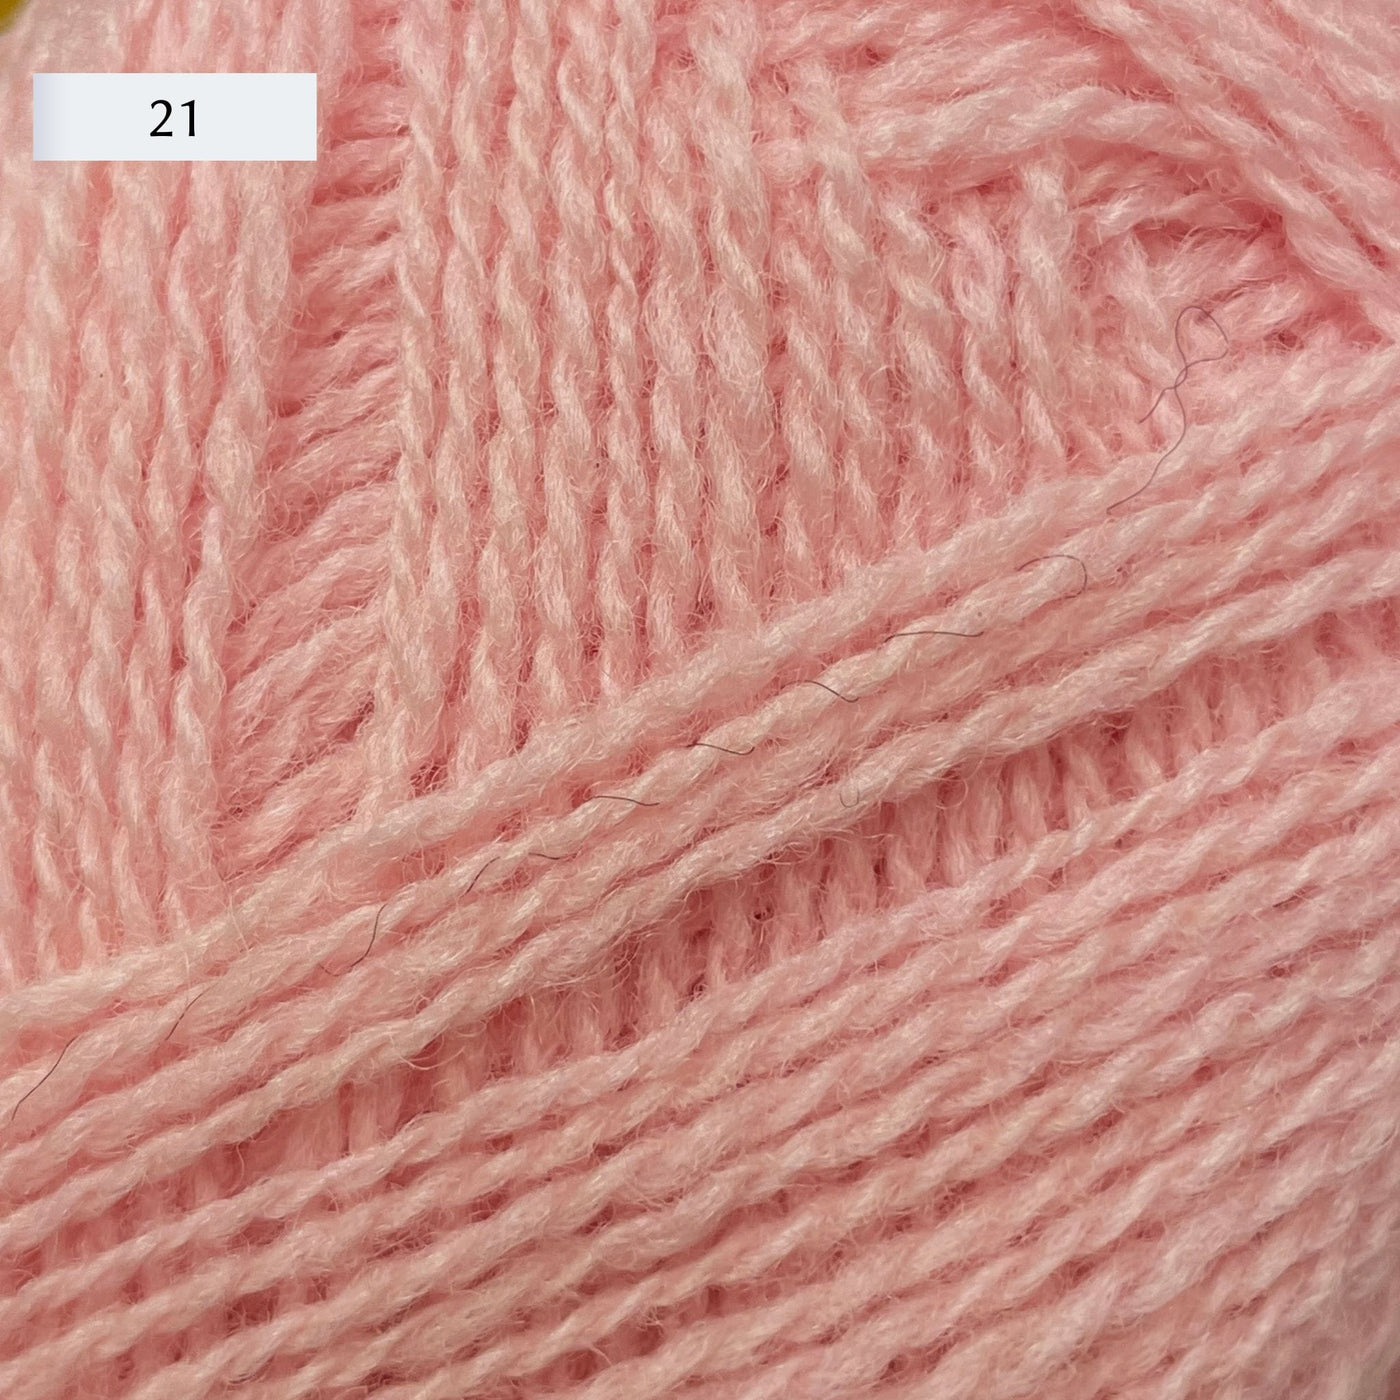 Rauma Lamullgarn, a fingering weight yarn, in color 21, a baby pink